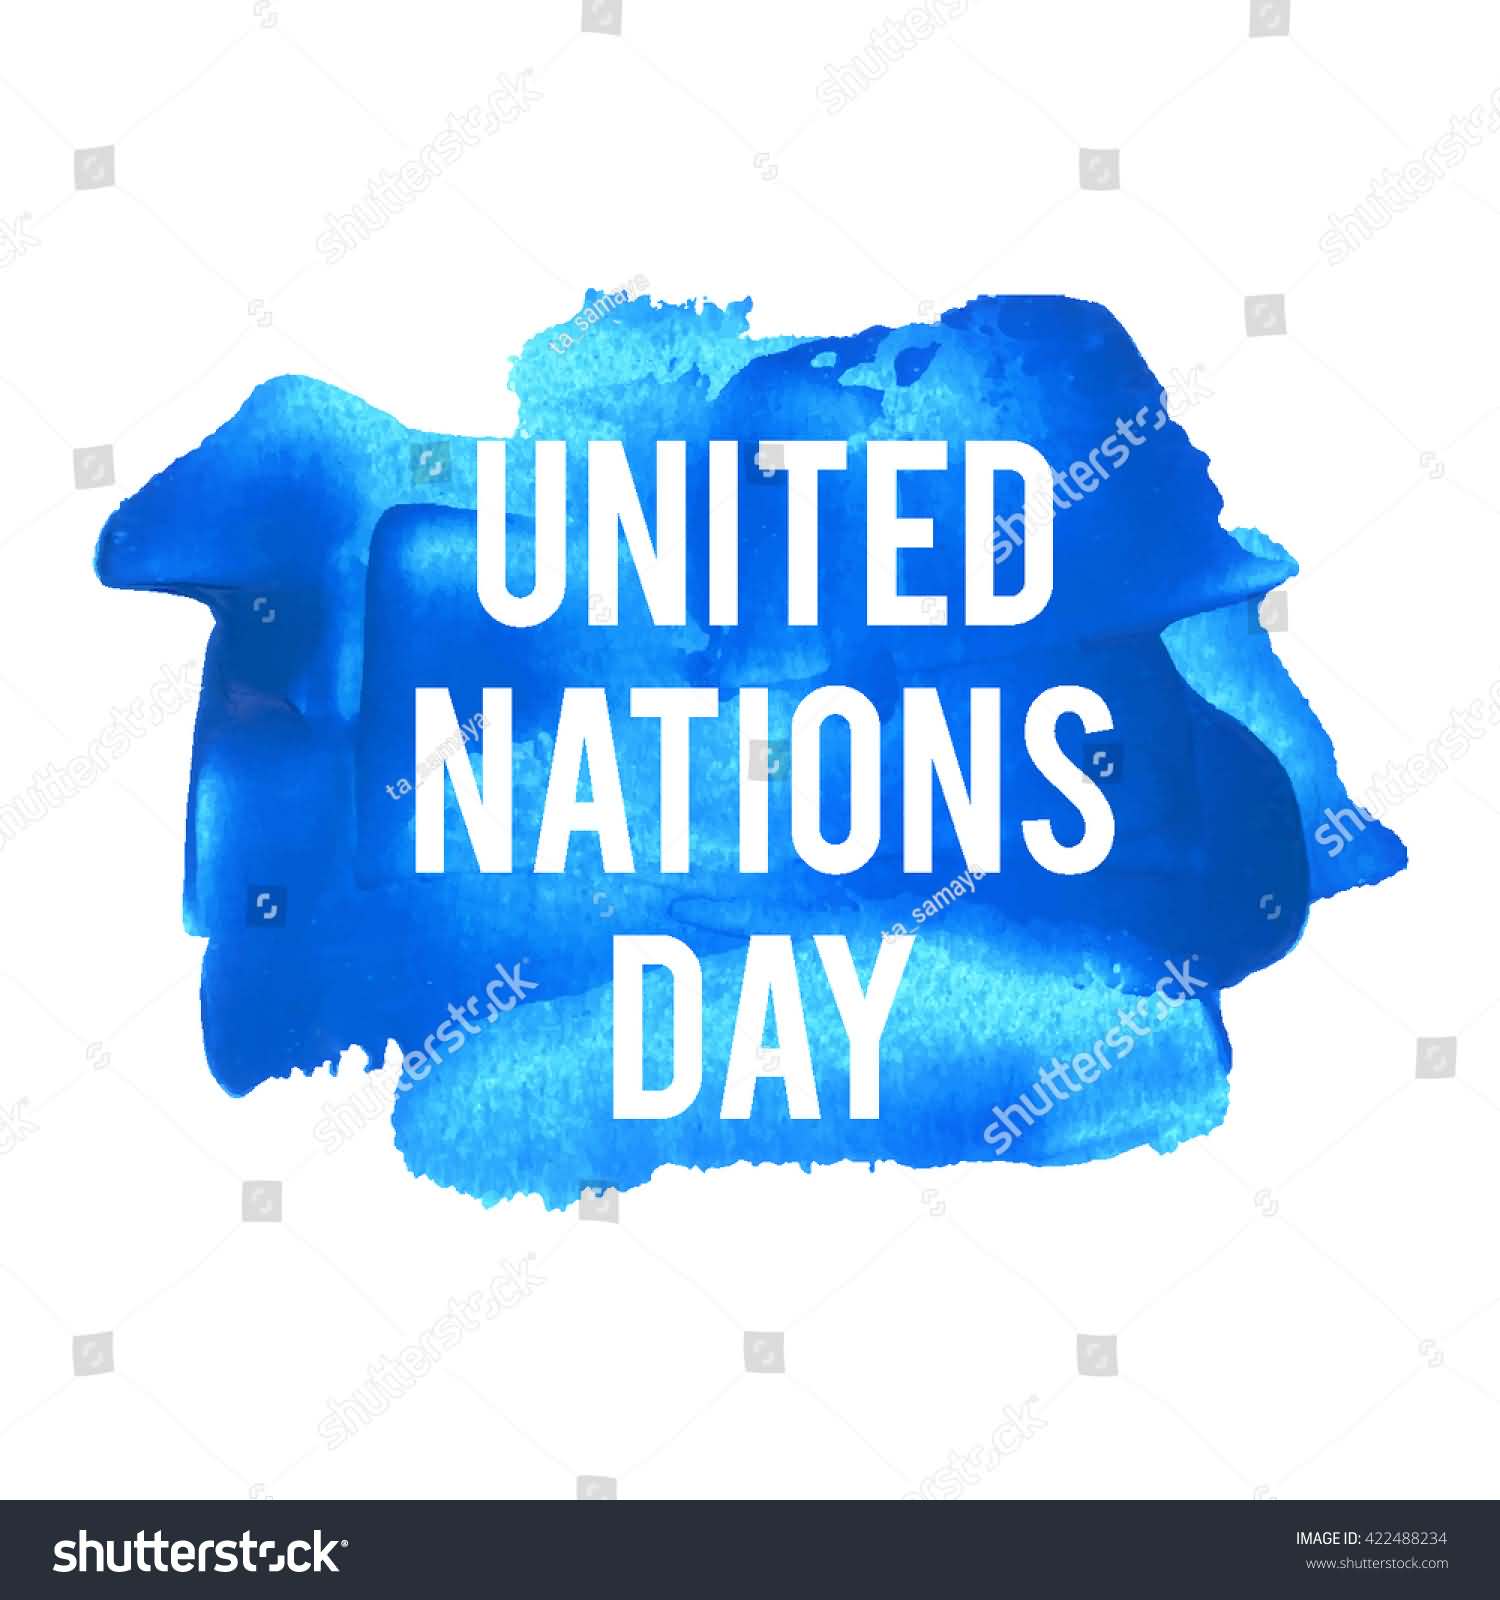 United Nations Day Ink Blot Illustration